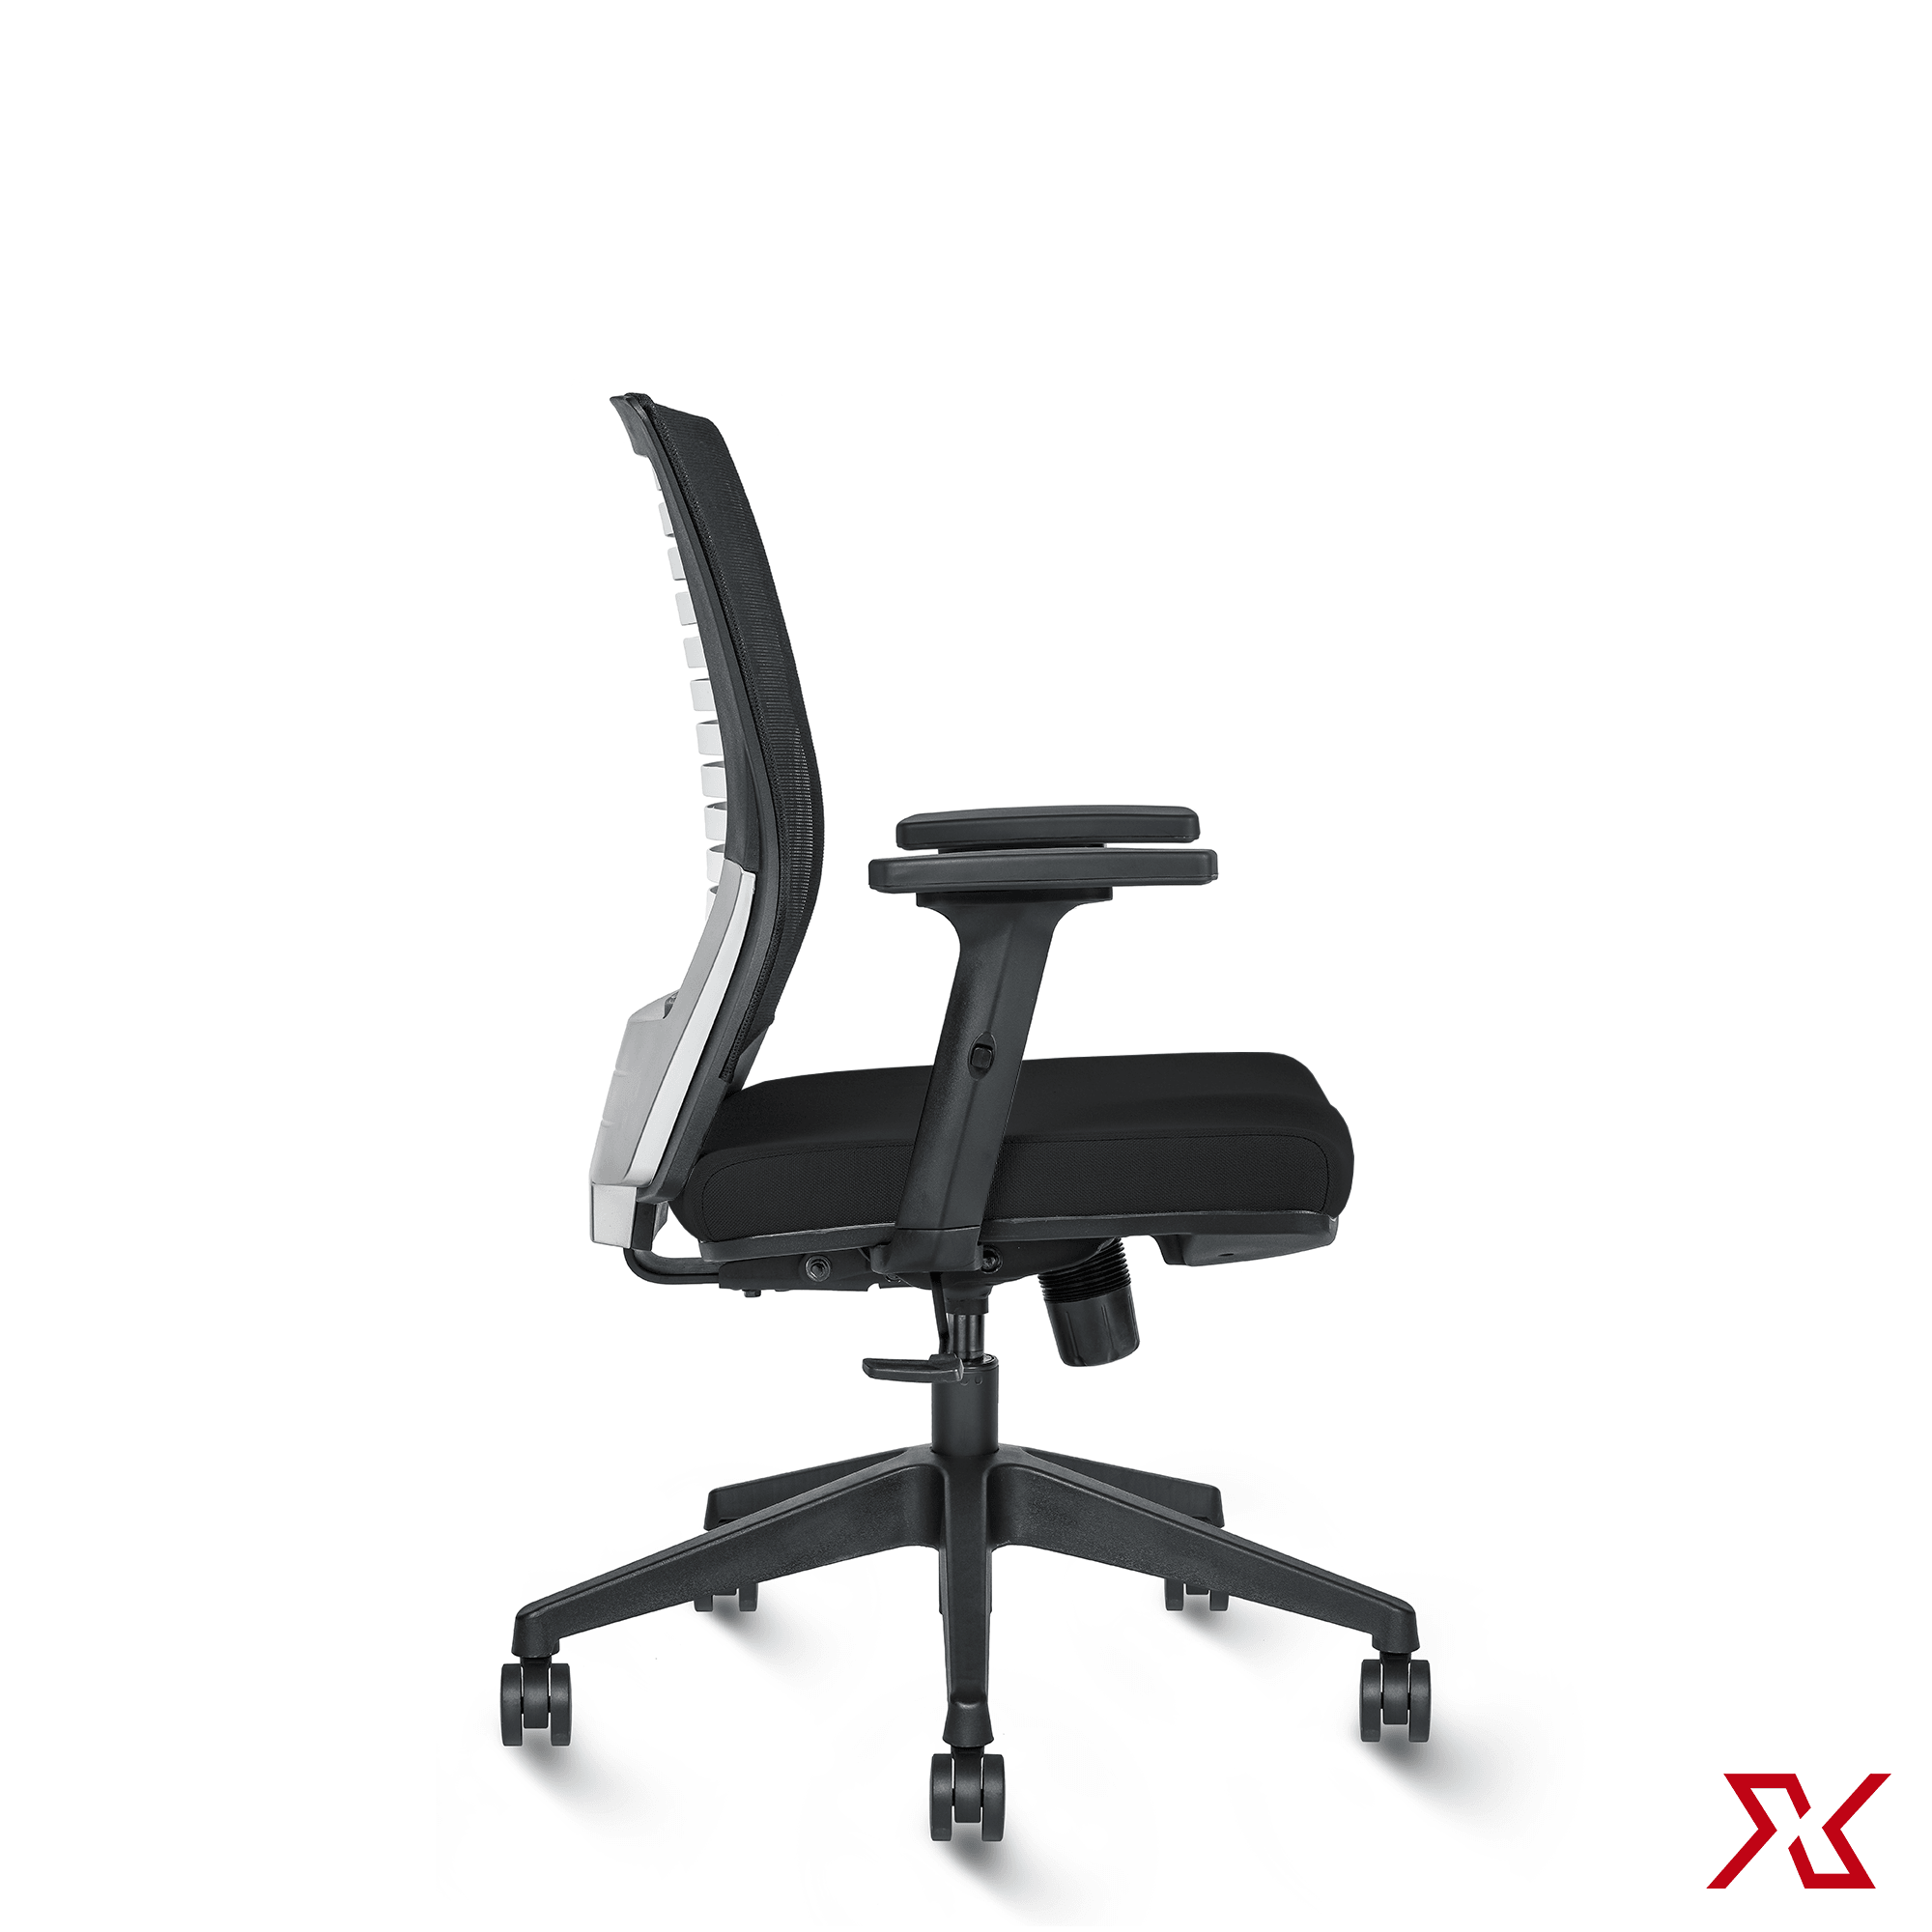 VINO Medium Back LX (Black Chair)